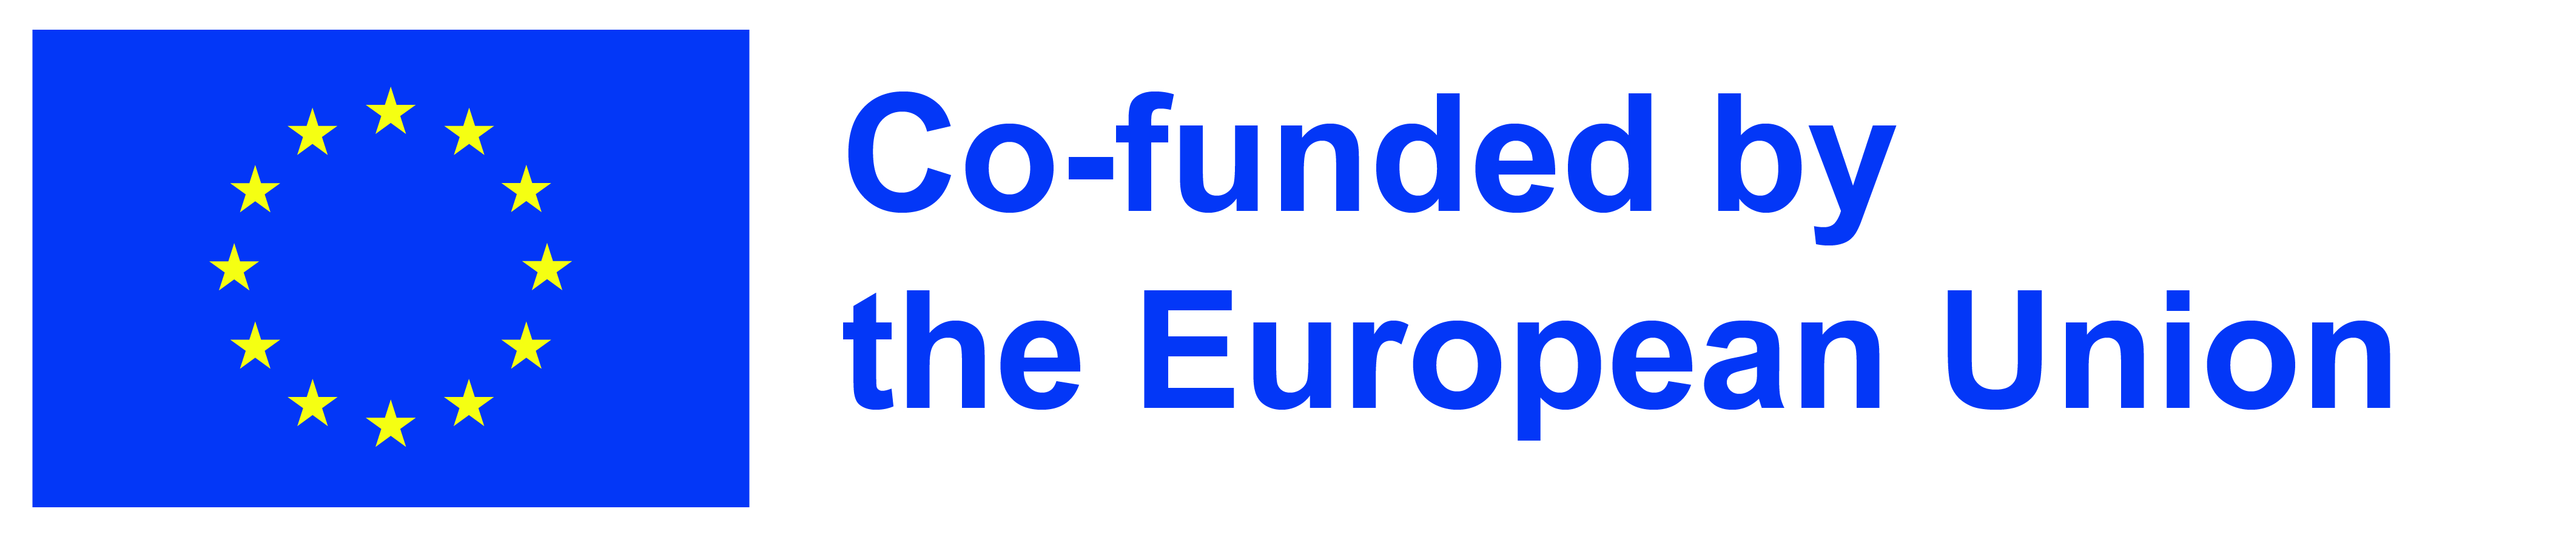 logo-eu-funded.jpg